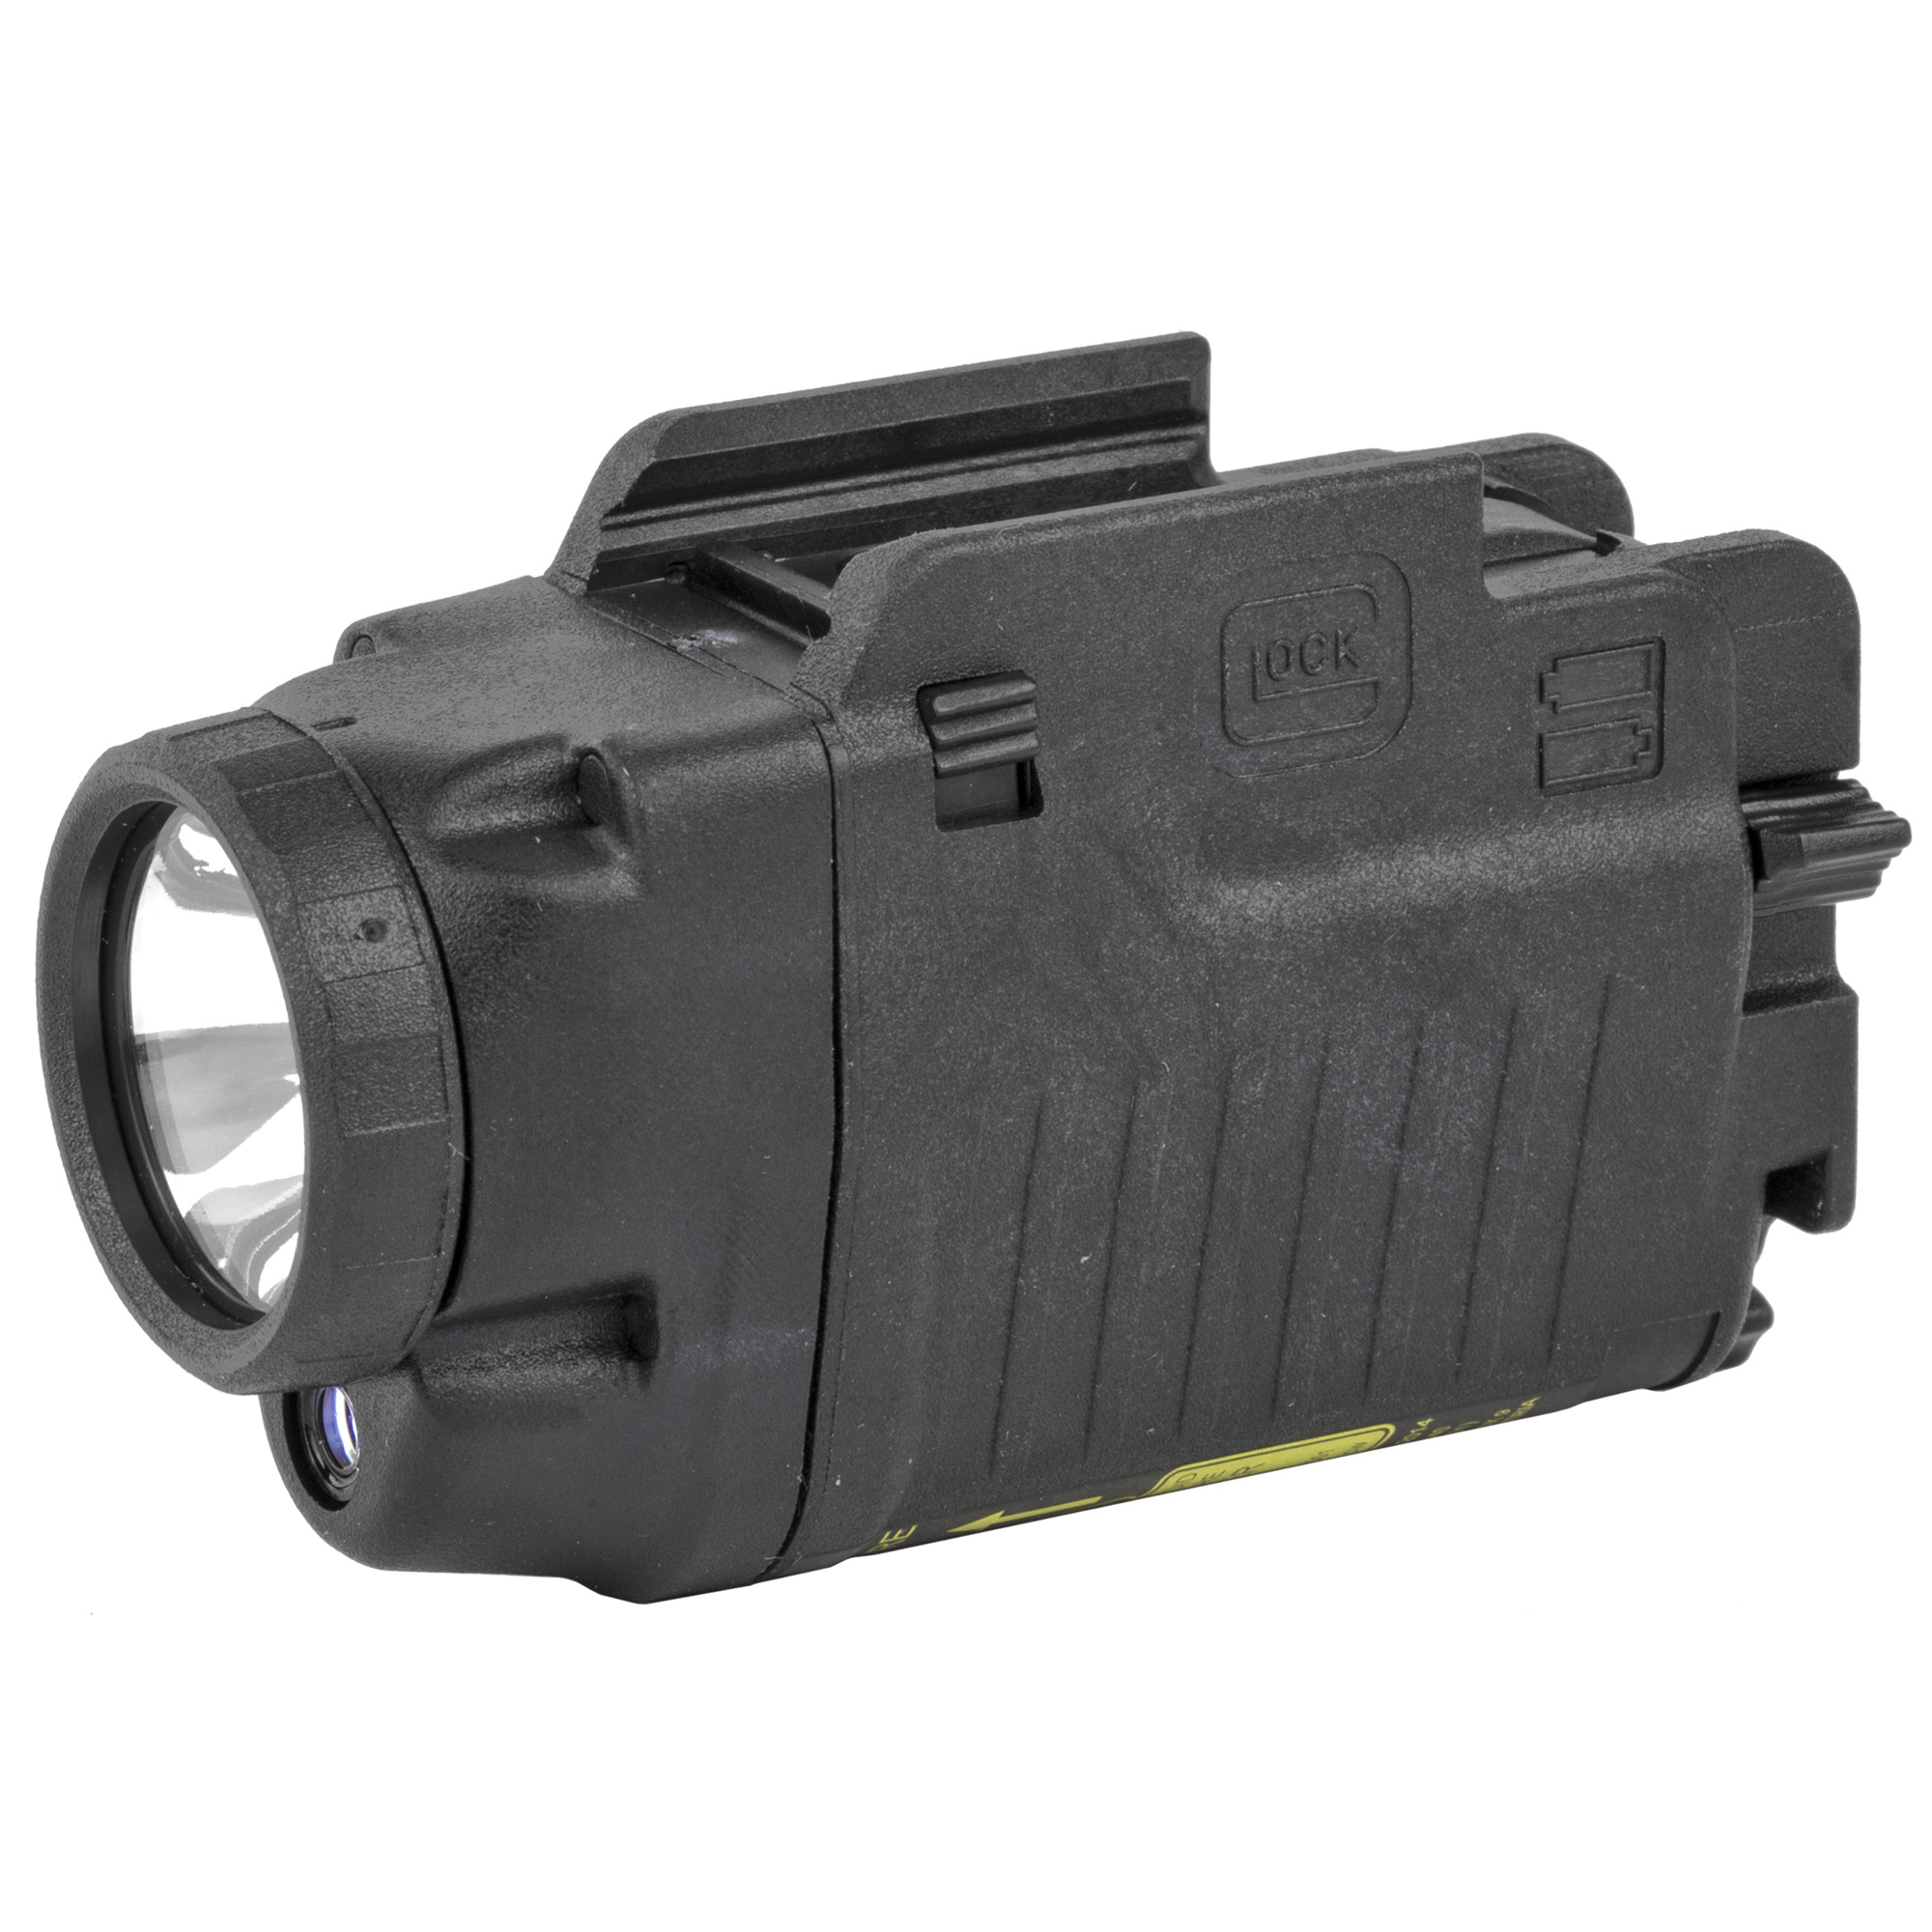 Glock OEM GTL 21 Tactical Laser/Light Combo Handgun Clear 70 Lumens Red Laser Black Polymer (TACO3680) 764503036804